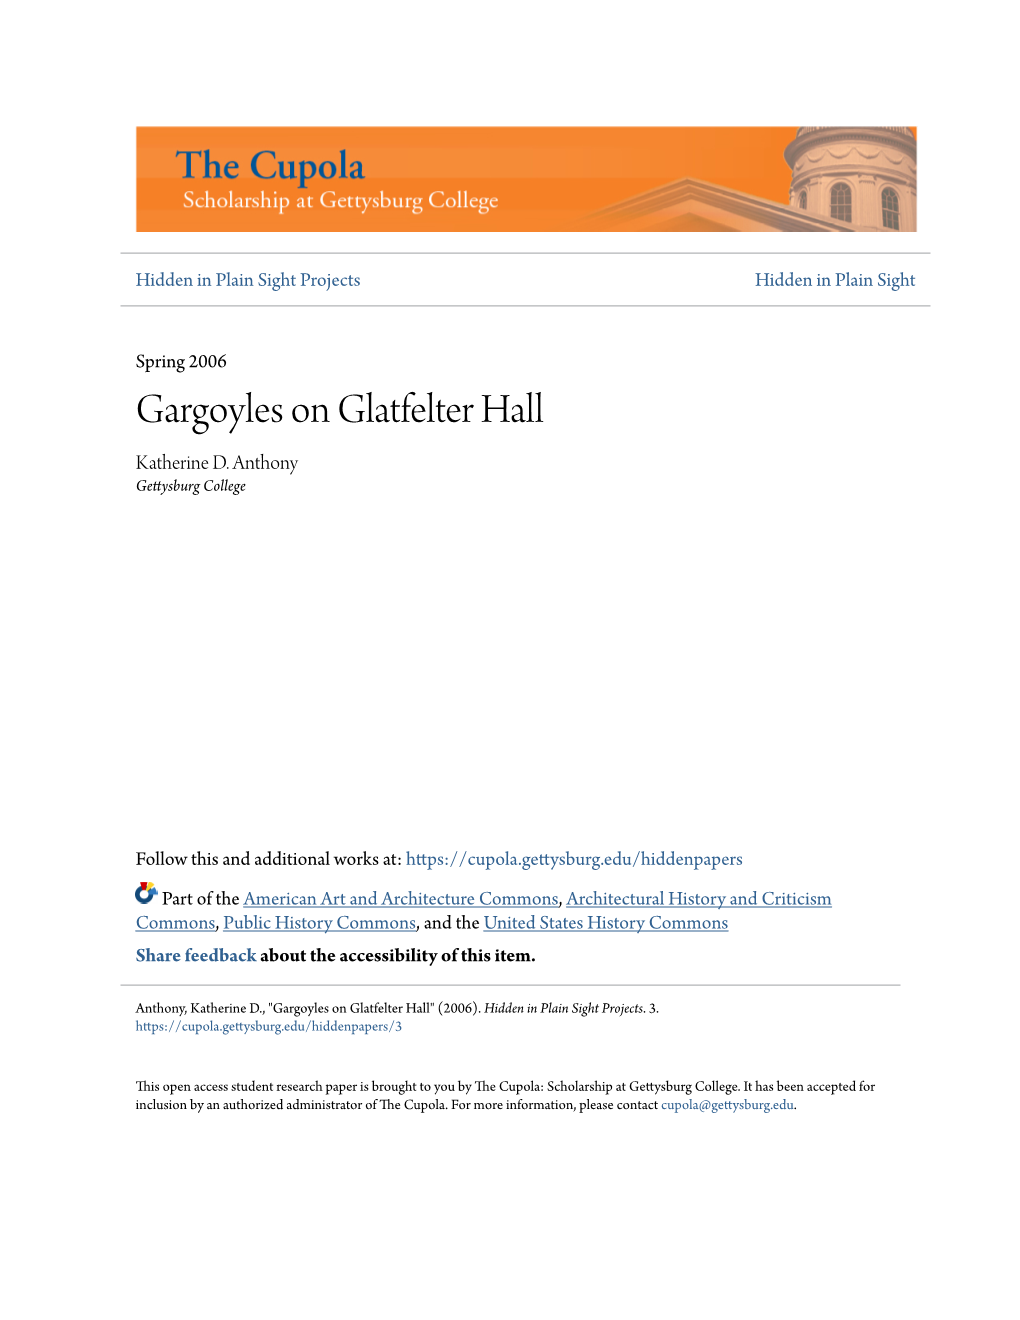 Gargoyles on Glatfelter Hall Katherine D